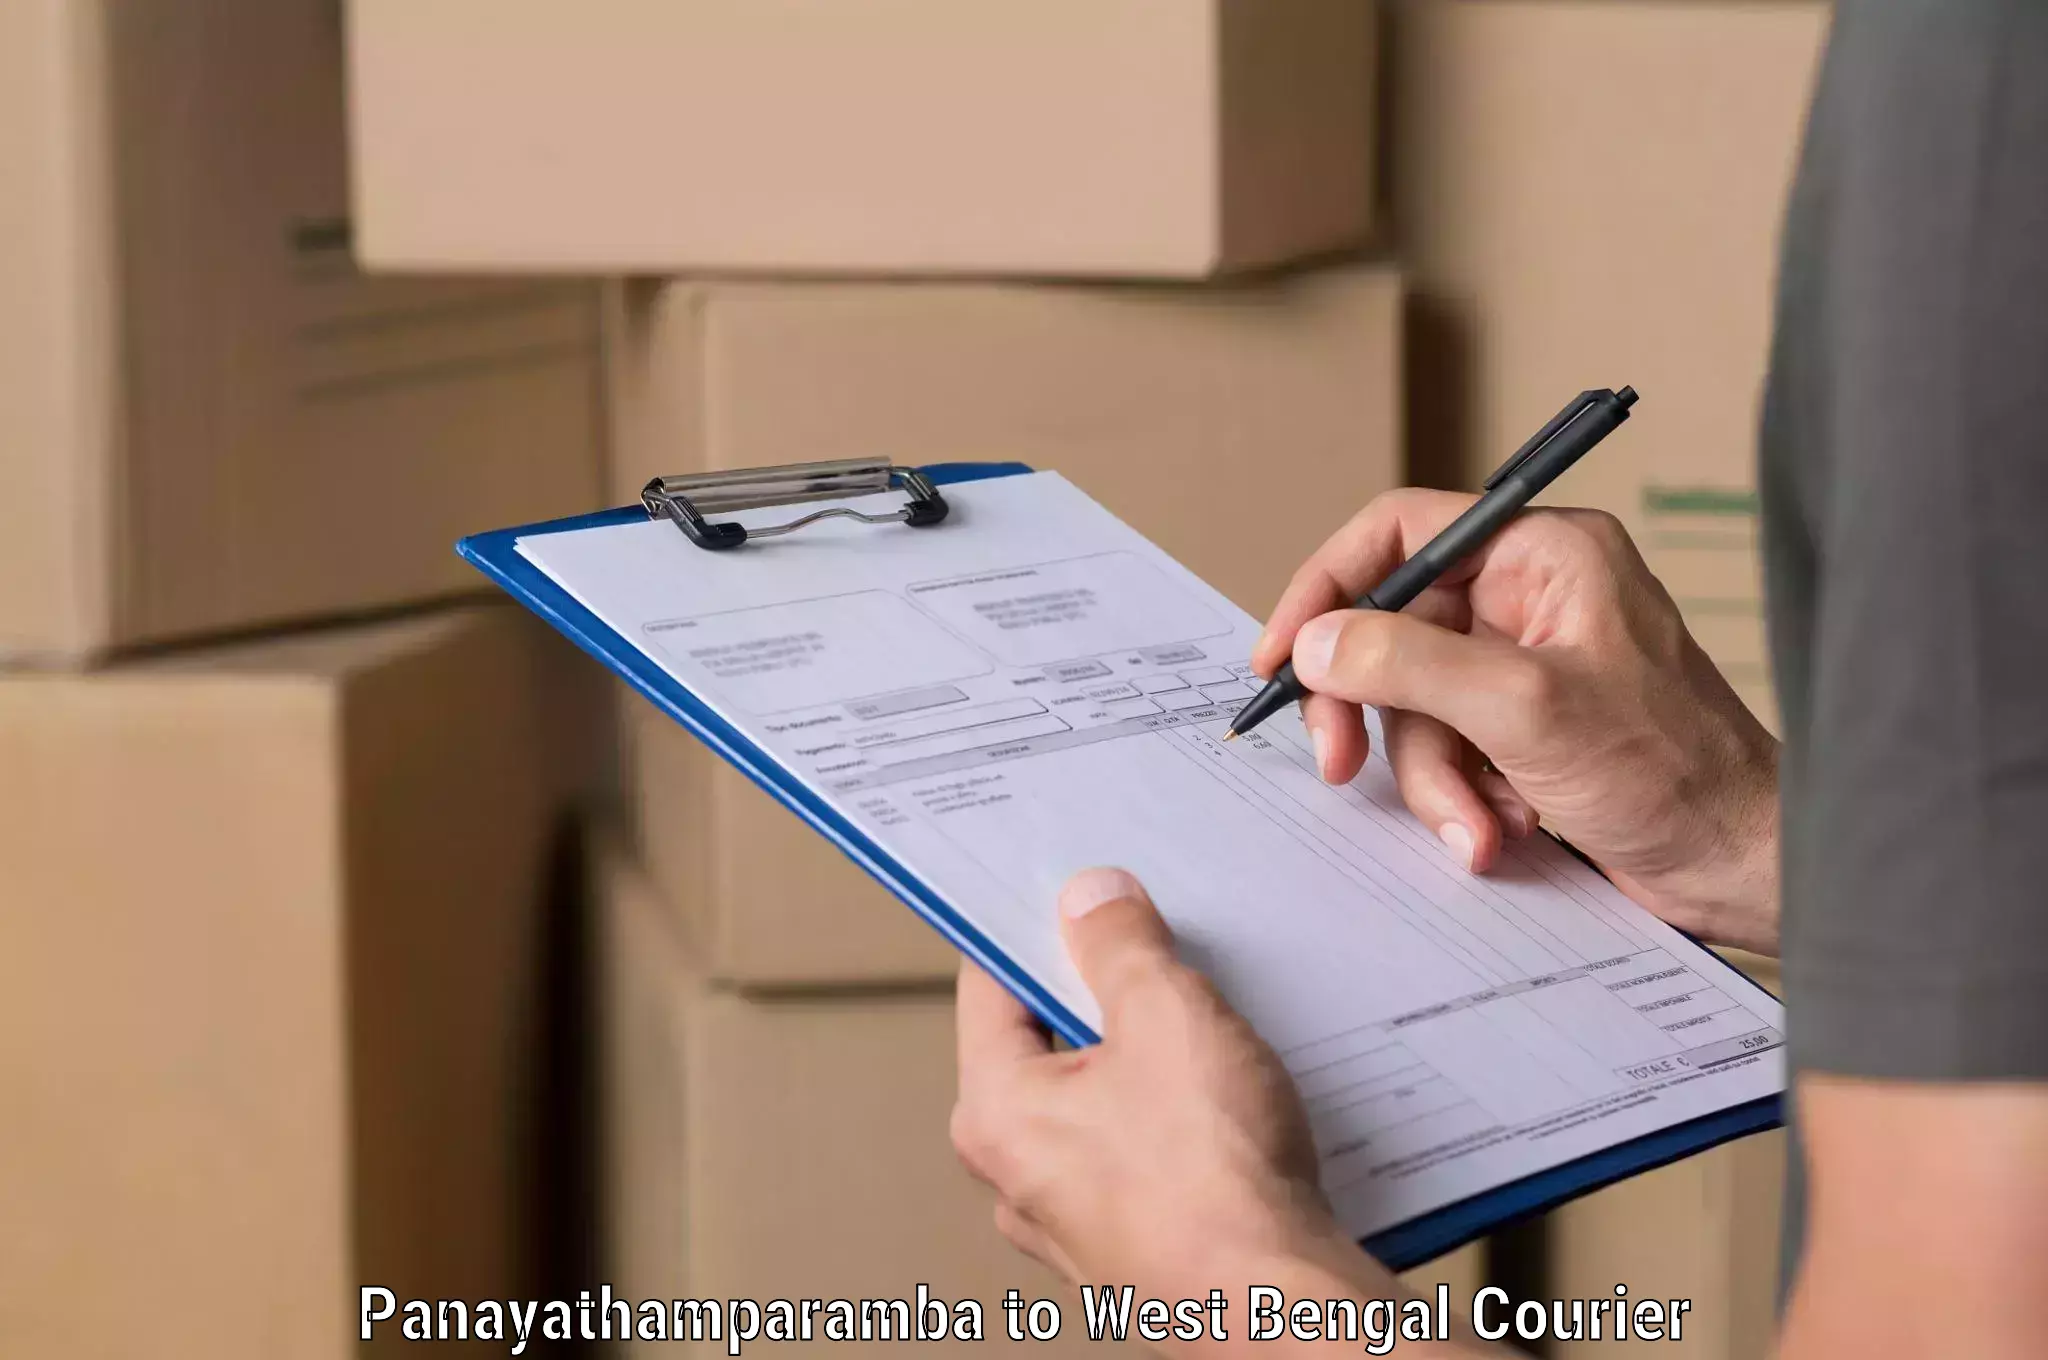 Courier service innovation Panayathamparamba to Hanskhali